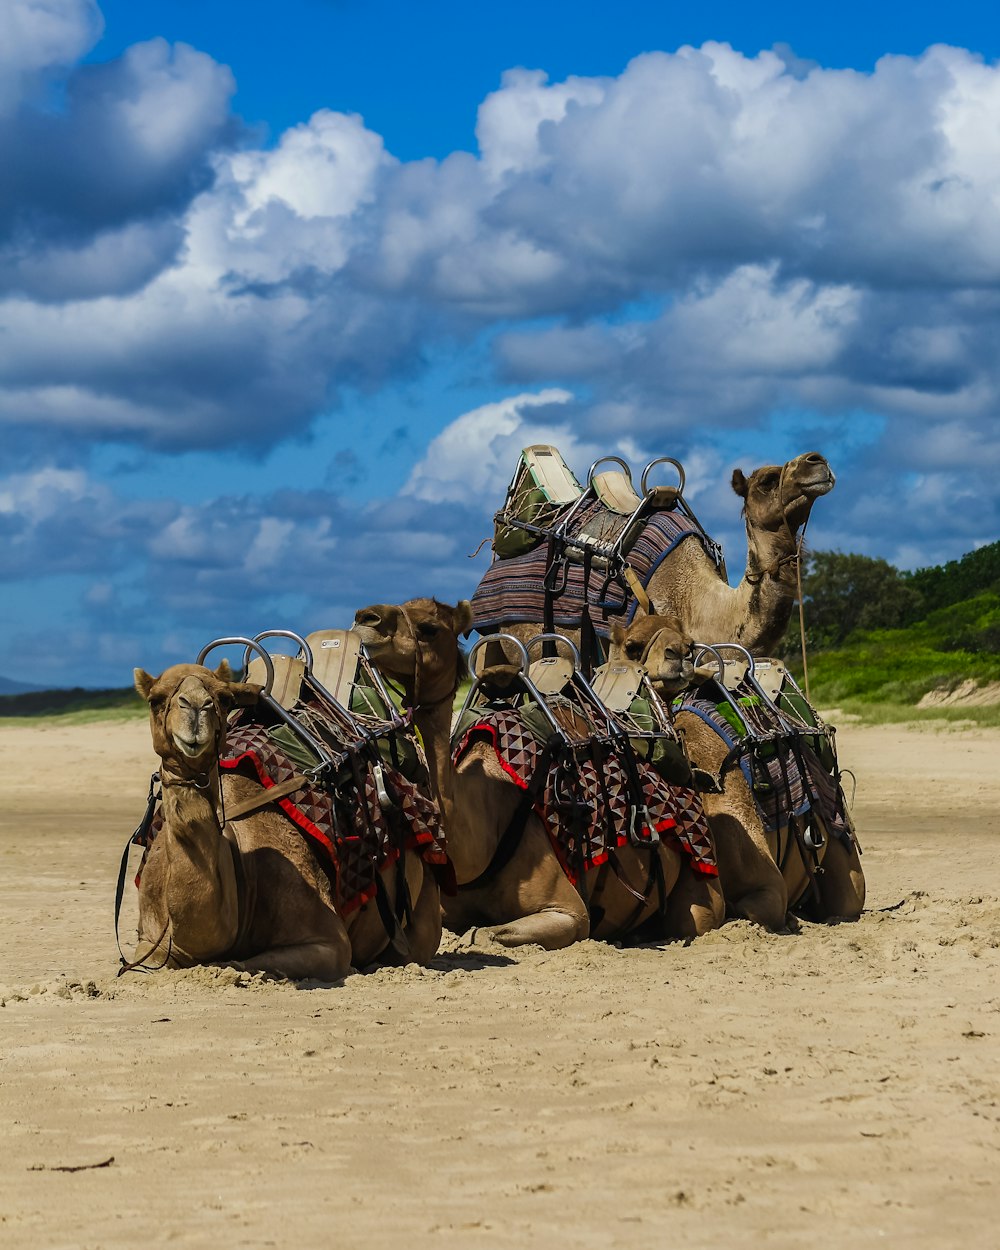 camels on desert during daytime